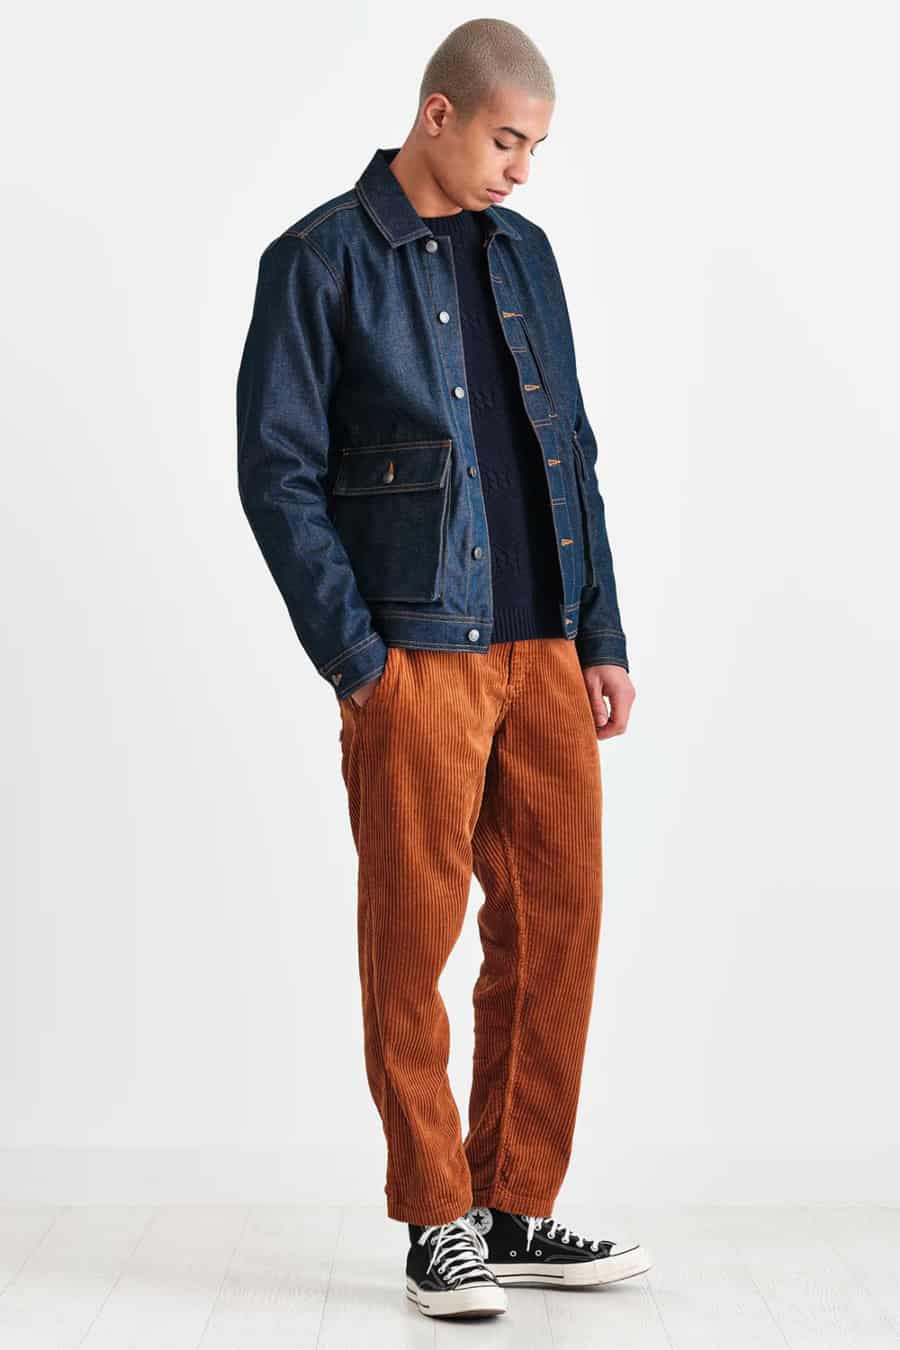 Men's brown-orange corduroys, navy sweatshirt, raw denim jean jacket and black canvas high-tops outfit